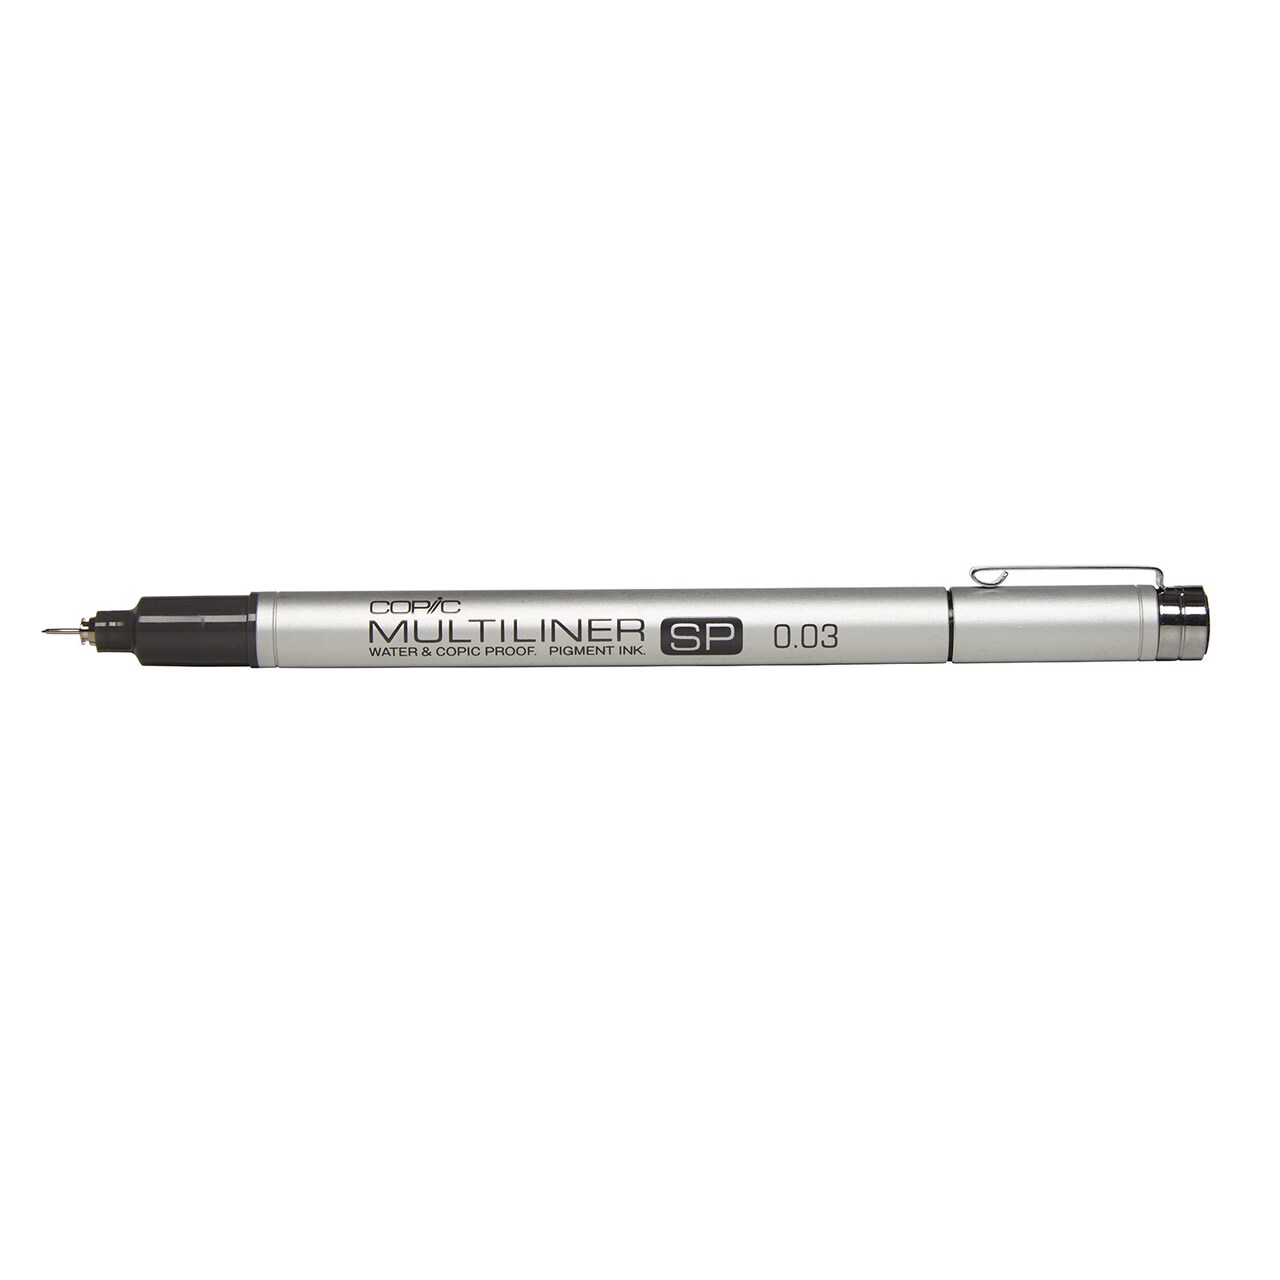 Copic Multiliner SP Pen, Black, .03mm